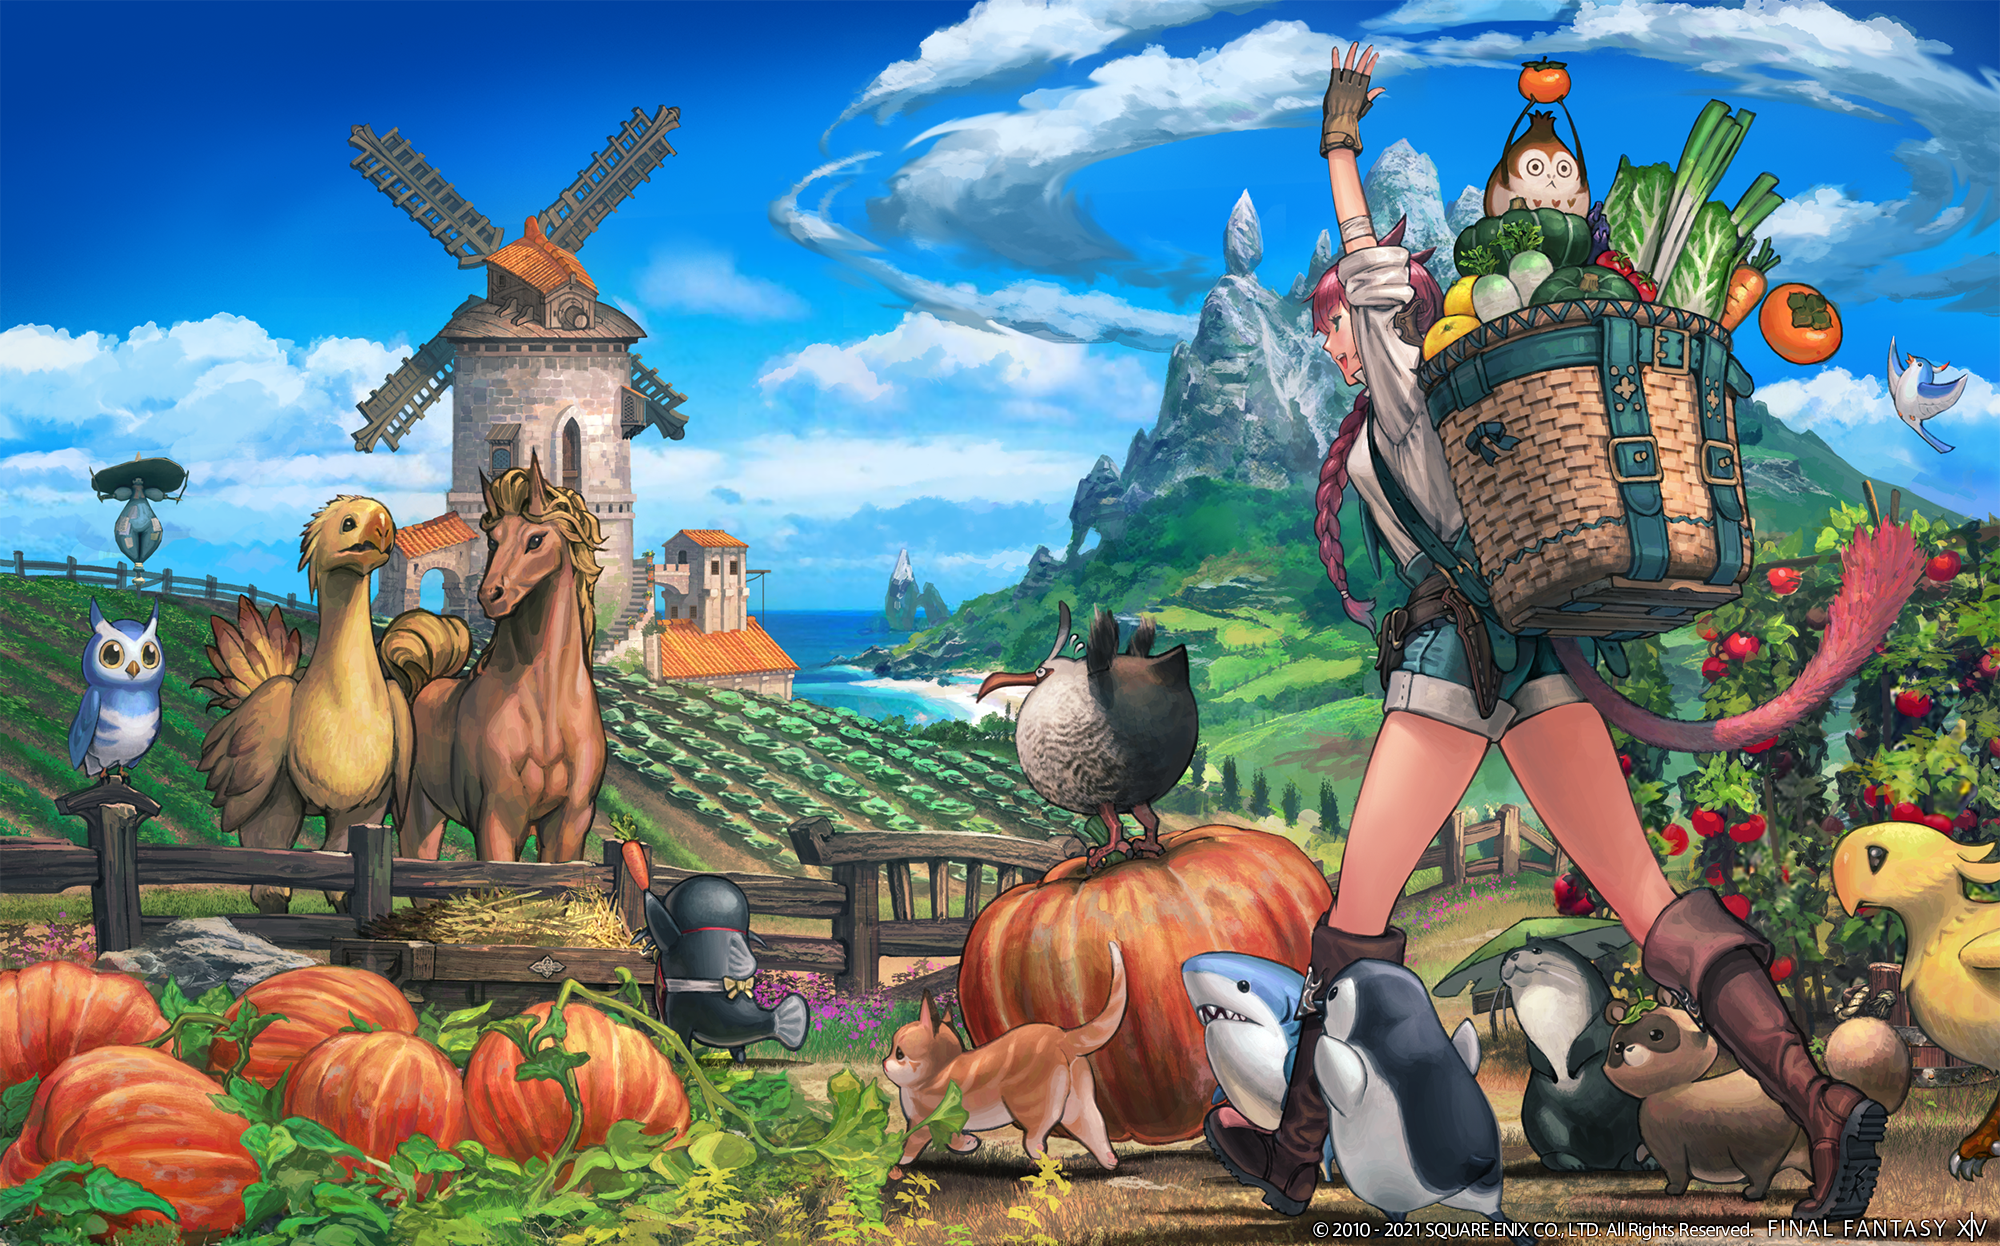 Final Fantasy 14 Island Sanctuary key artwork of player and minions near some horses